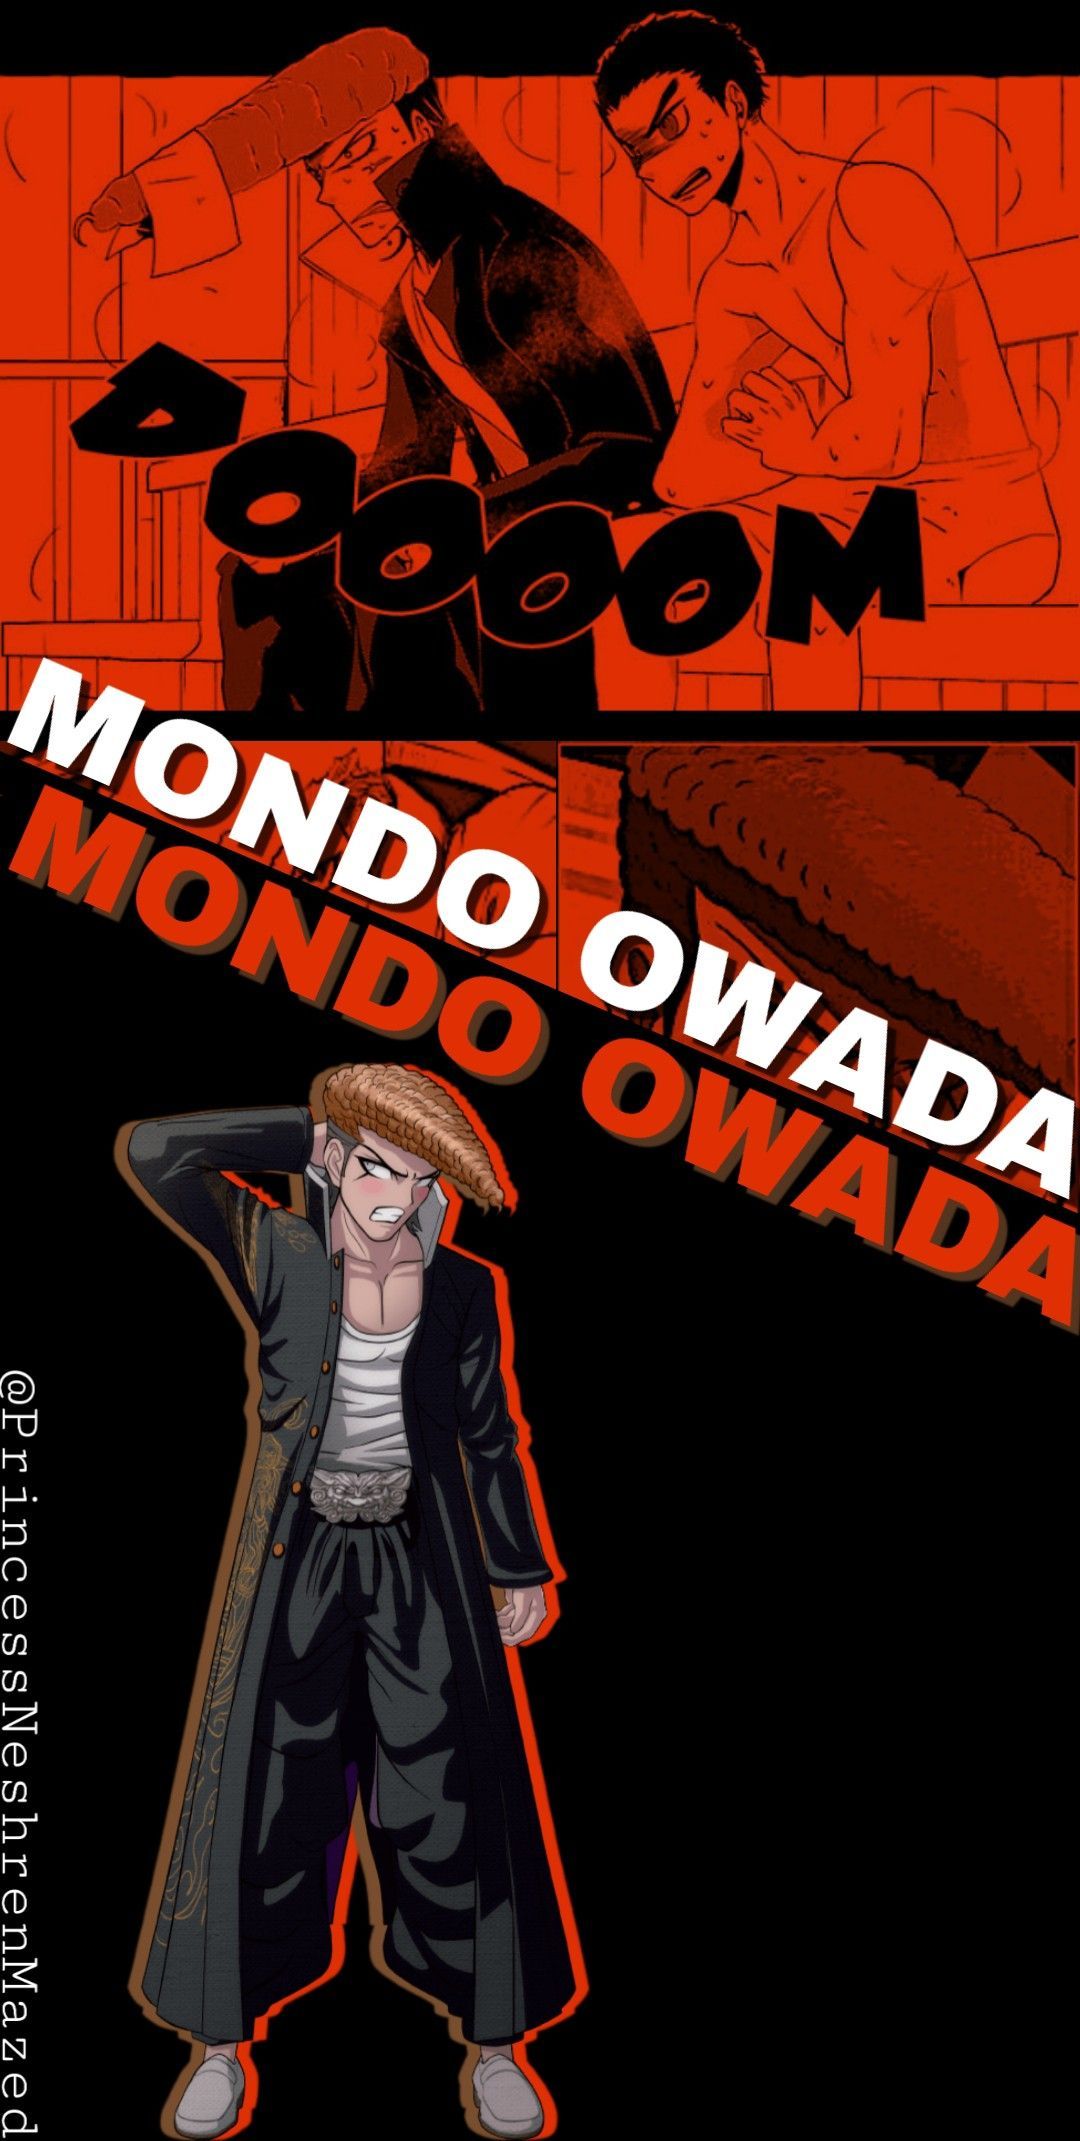 Mondo Owada wallpaper. Danganronpa, Anime wallpaper, Background